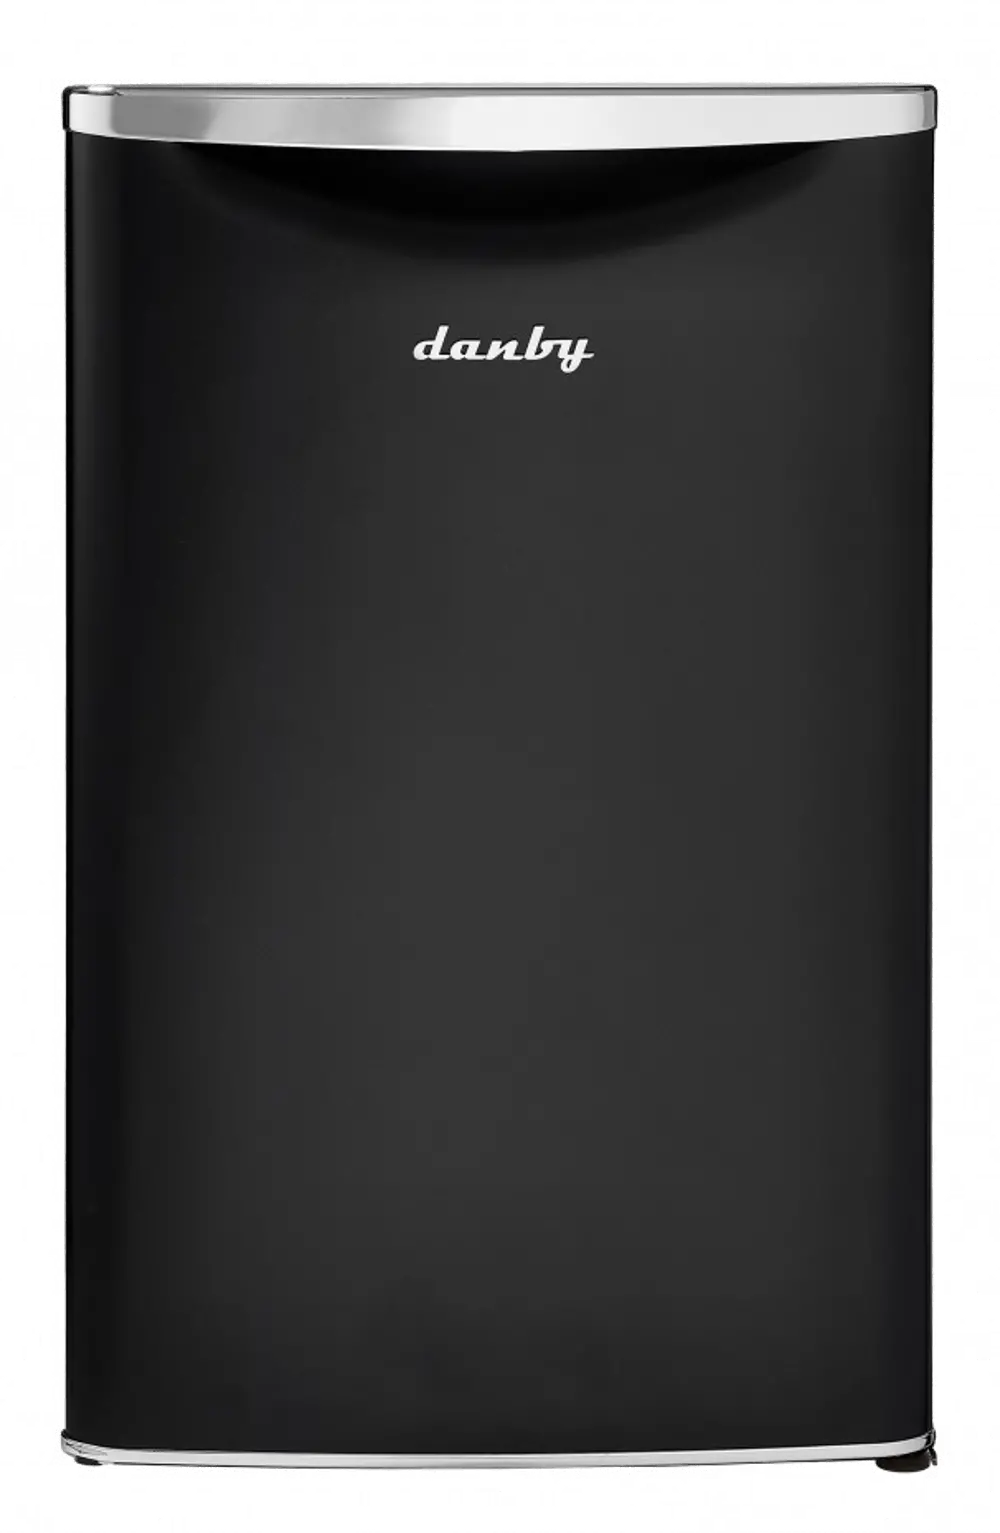 DAR044A6MDB Danby Compact Fridge - 20 Inch Black-1